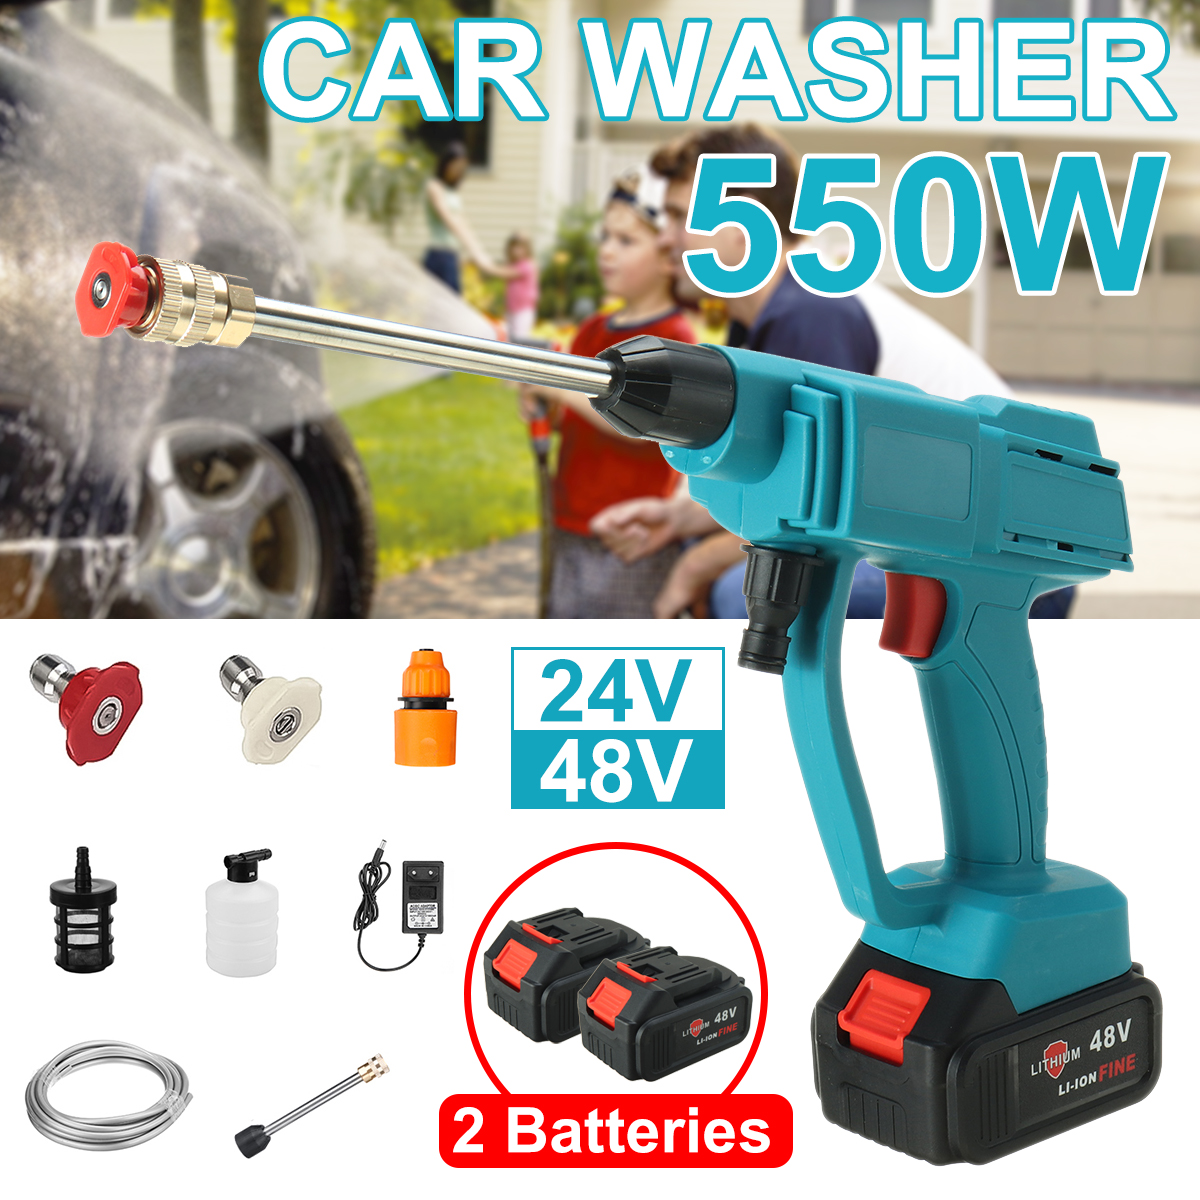 2448V-550W-Cordless-Electric-High-Pressure-Washer-Car-Washing-Machine-Spray-Guns-Lance-Hose-Set-W-12-1870567-2